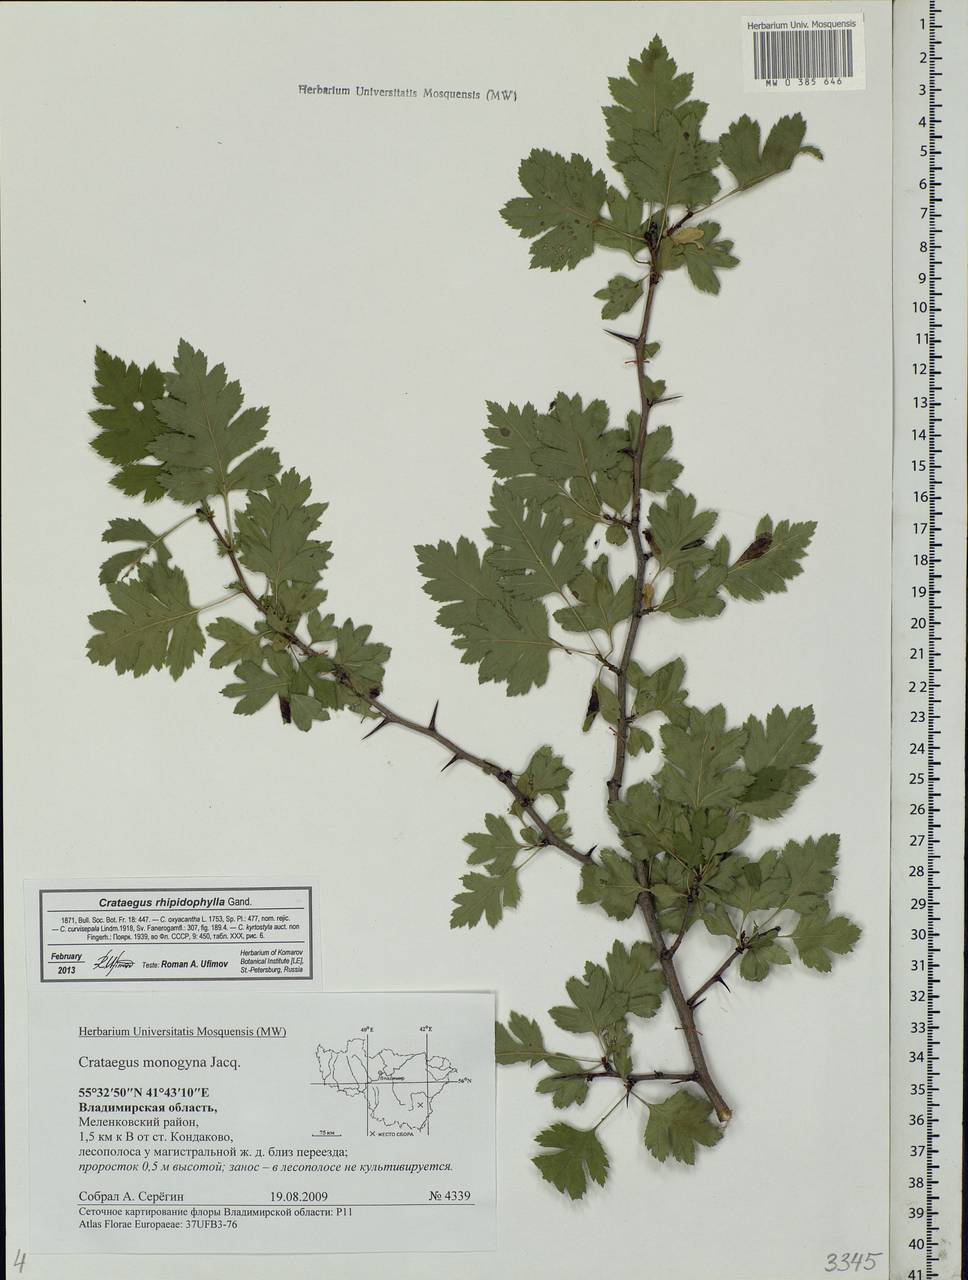 Crataegus rhipidophylla